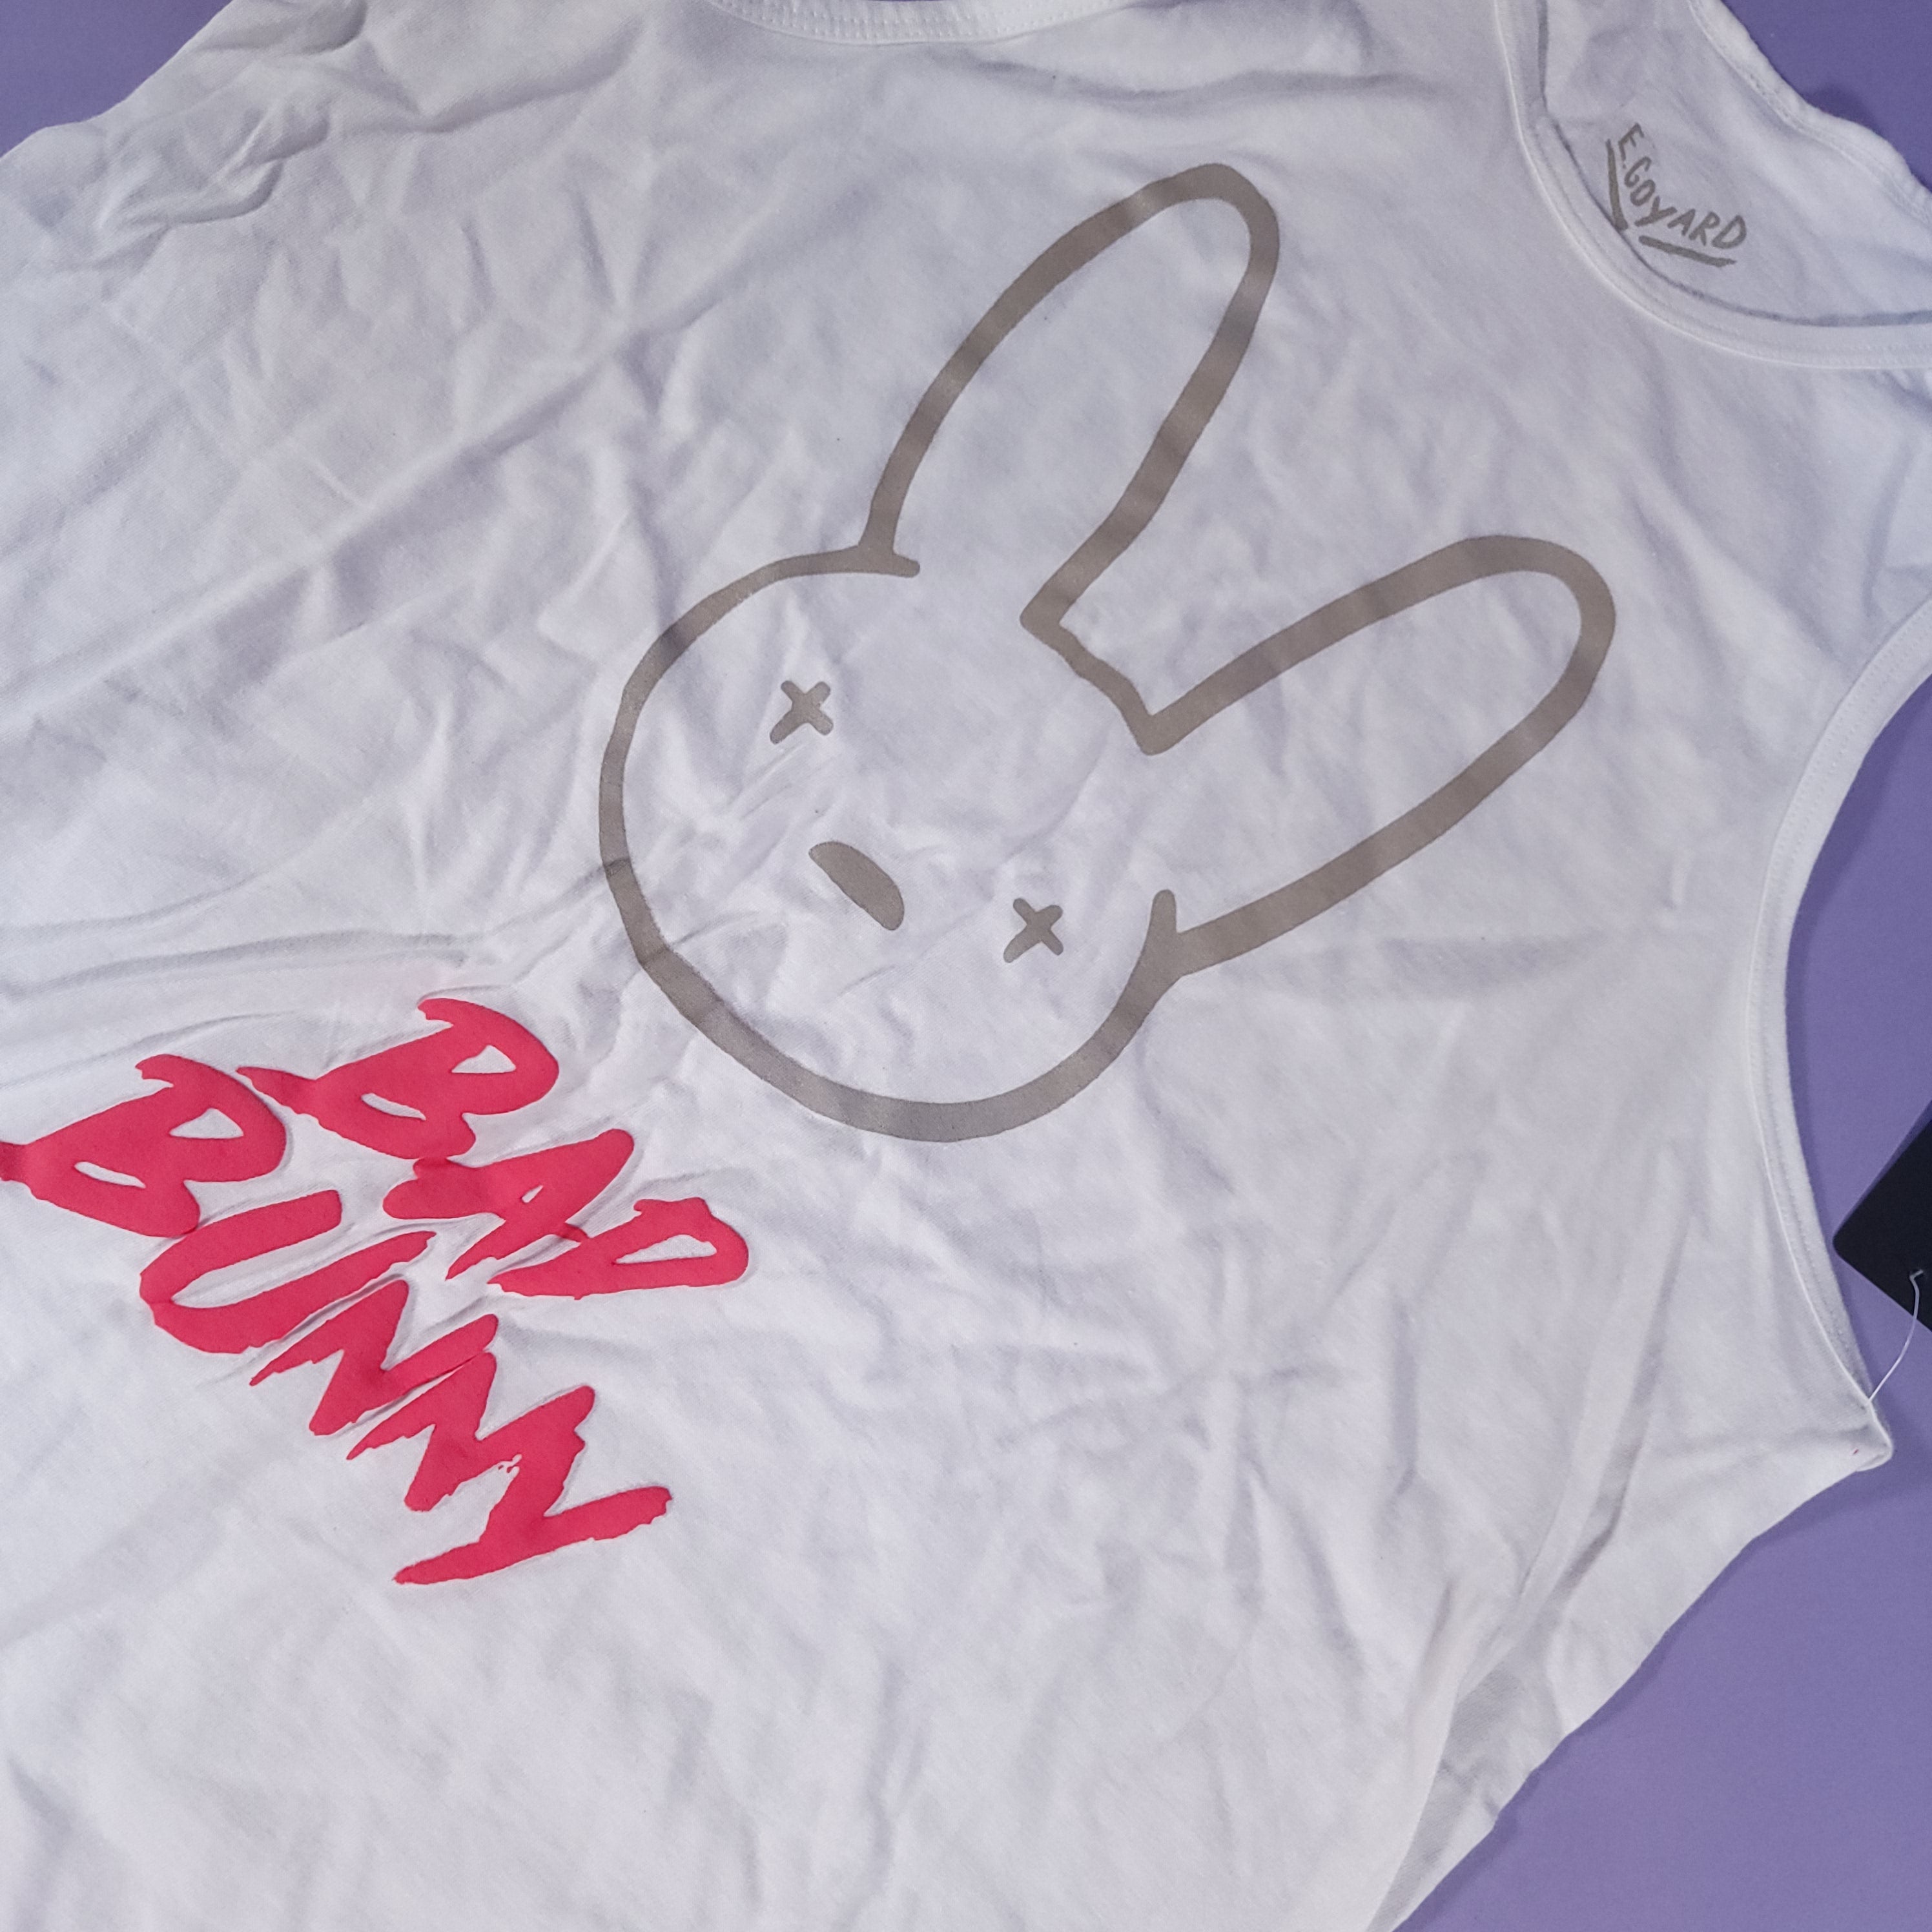 NWT E.Goyard Bad Bunny El Ultimo Tour Del Mundo Orlando, FL 2022 White Tank Top T-Shirt Men's sz M